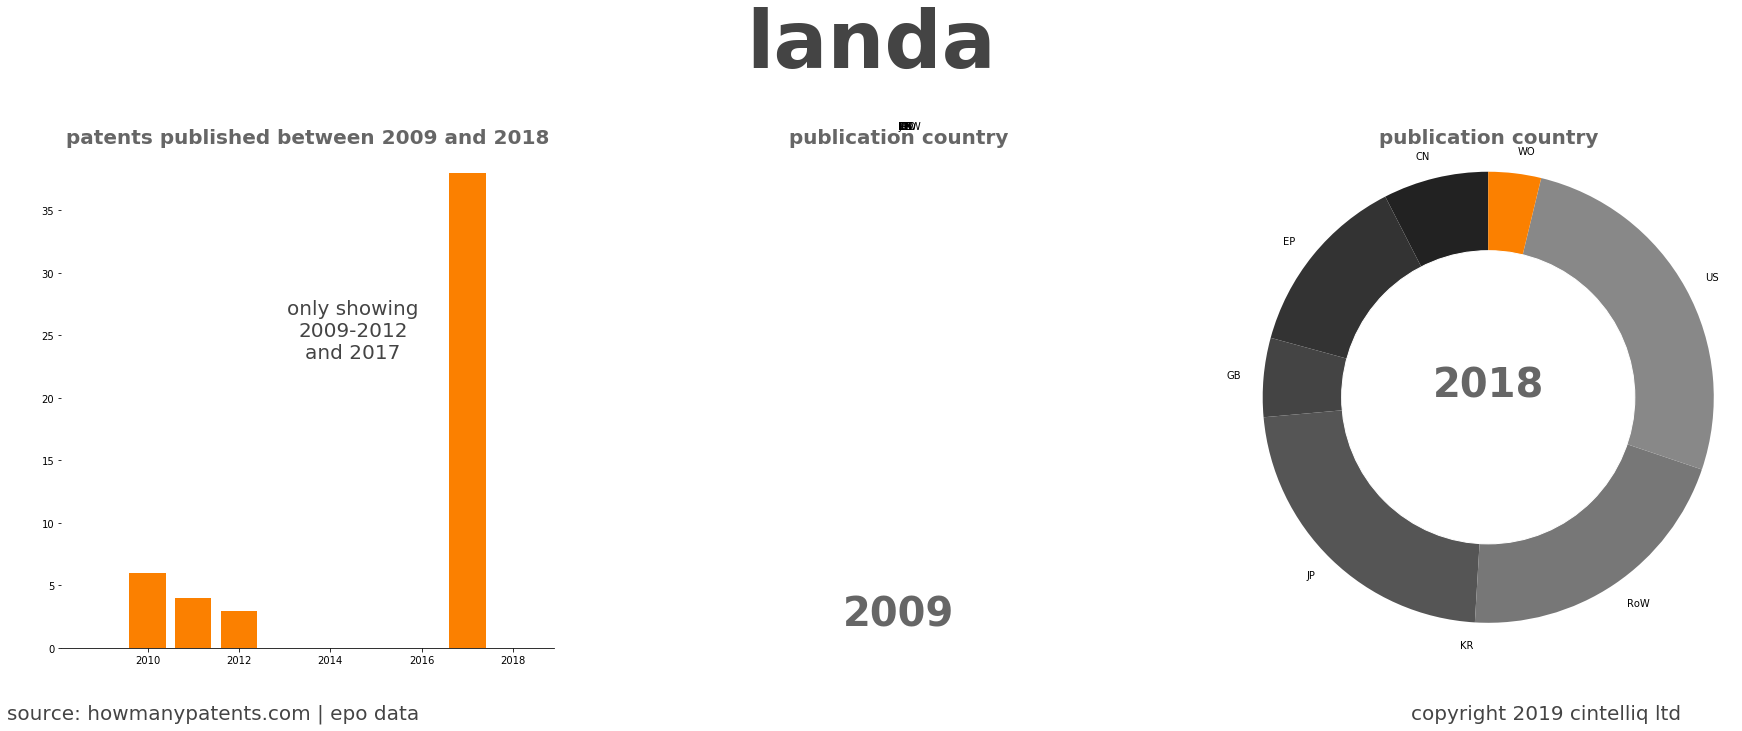 summary of patents for Landa